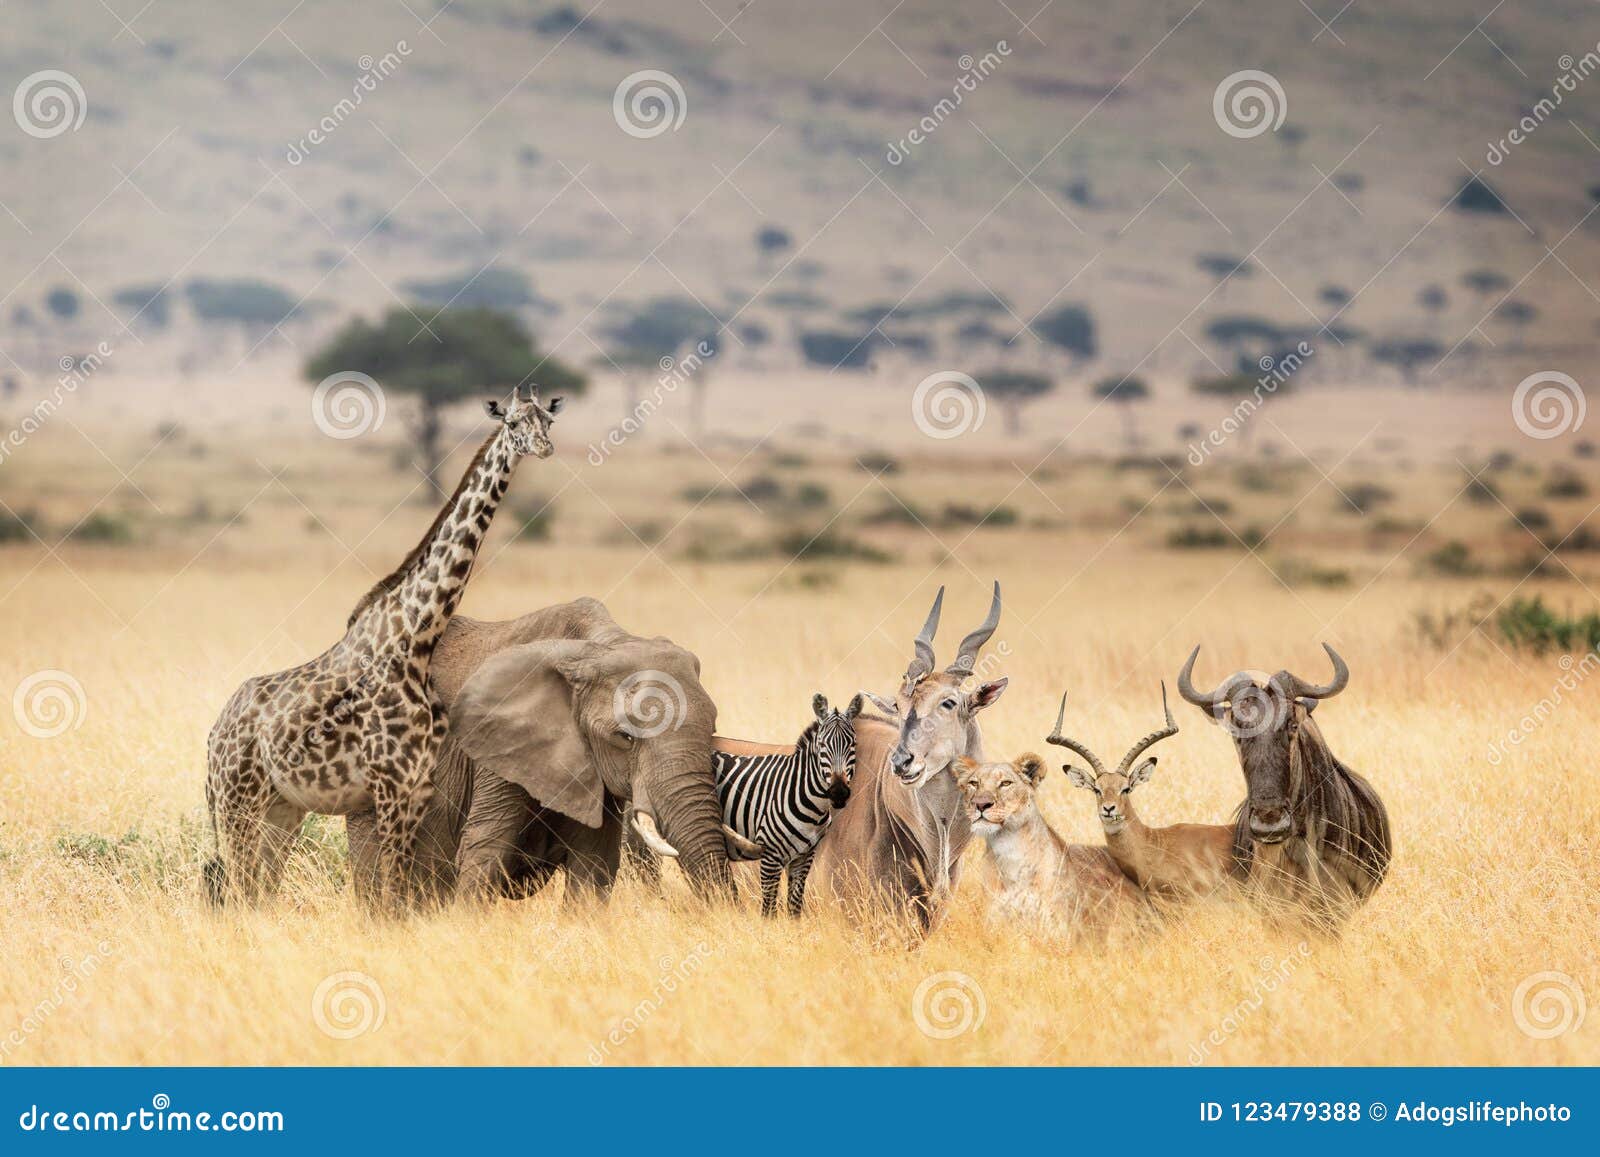 African Safari Animals in Dreamy Kenya Scene Stock Photo - Image of open,  fantasy: 123479388